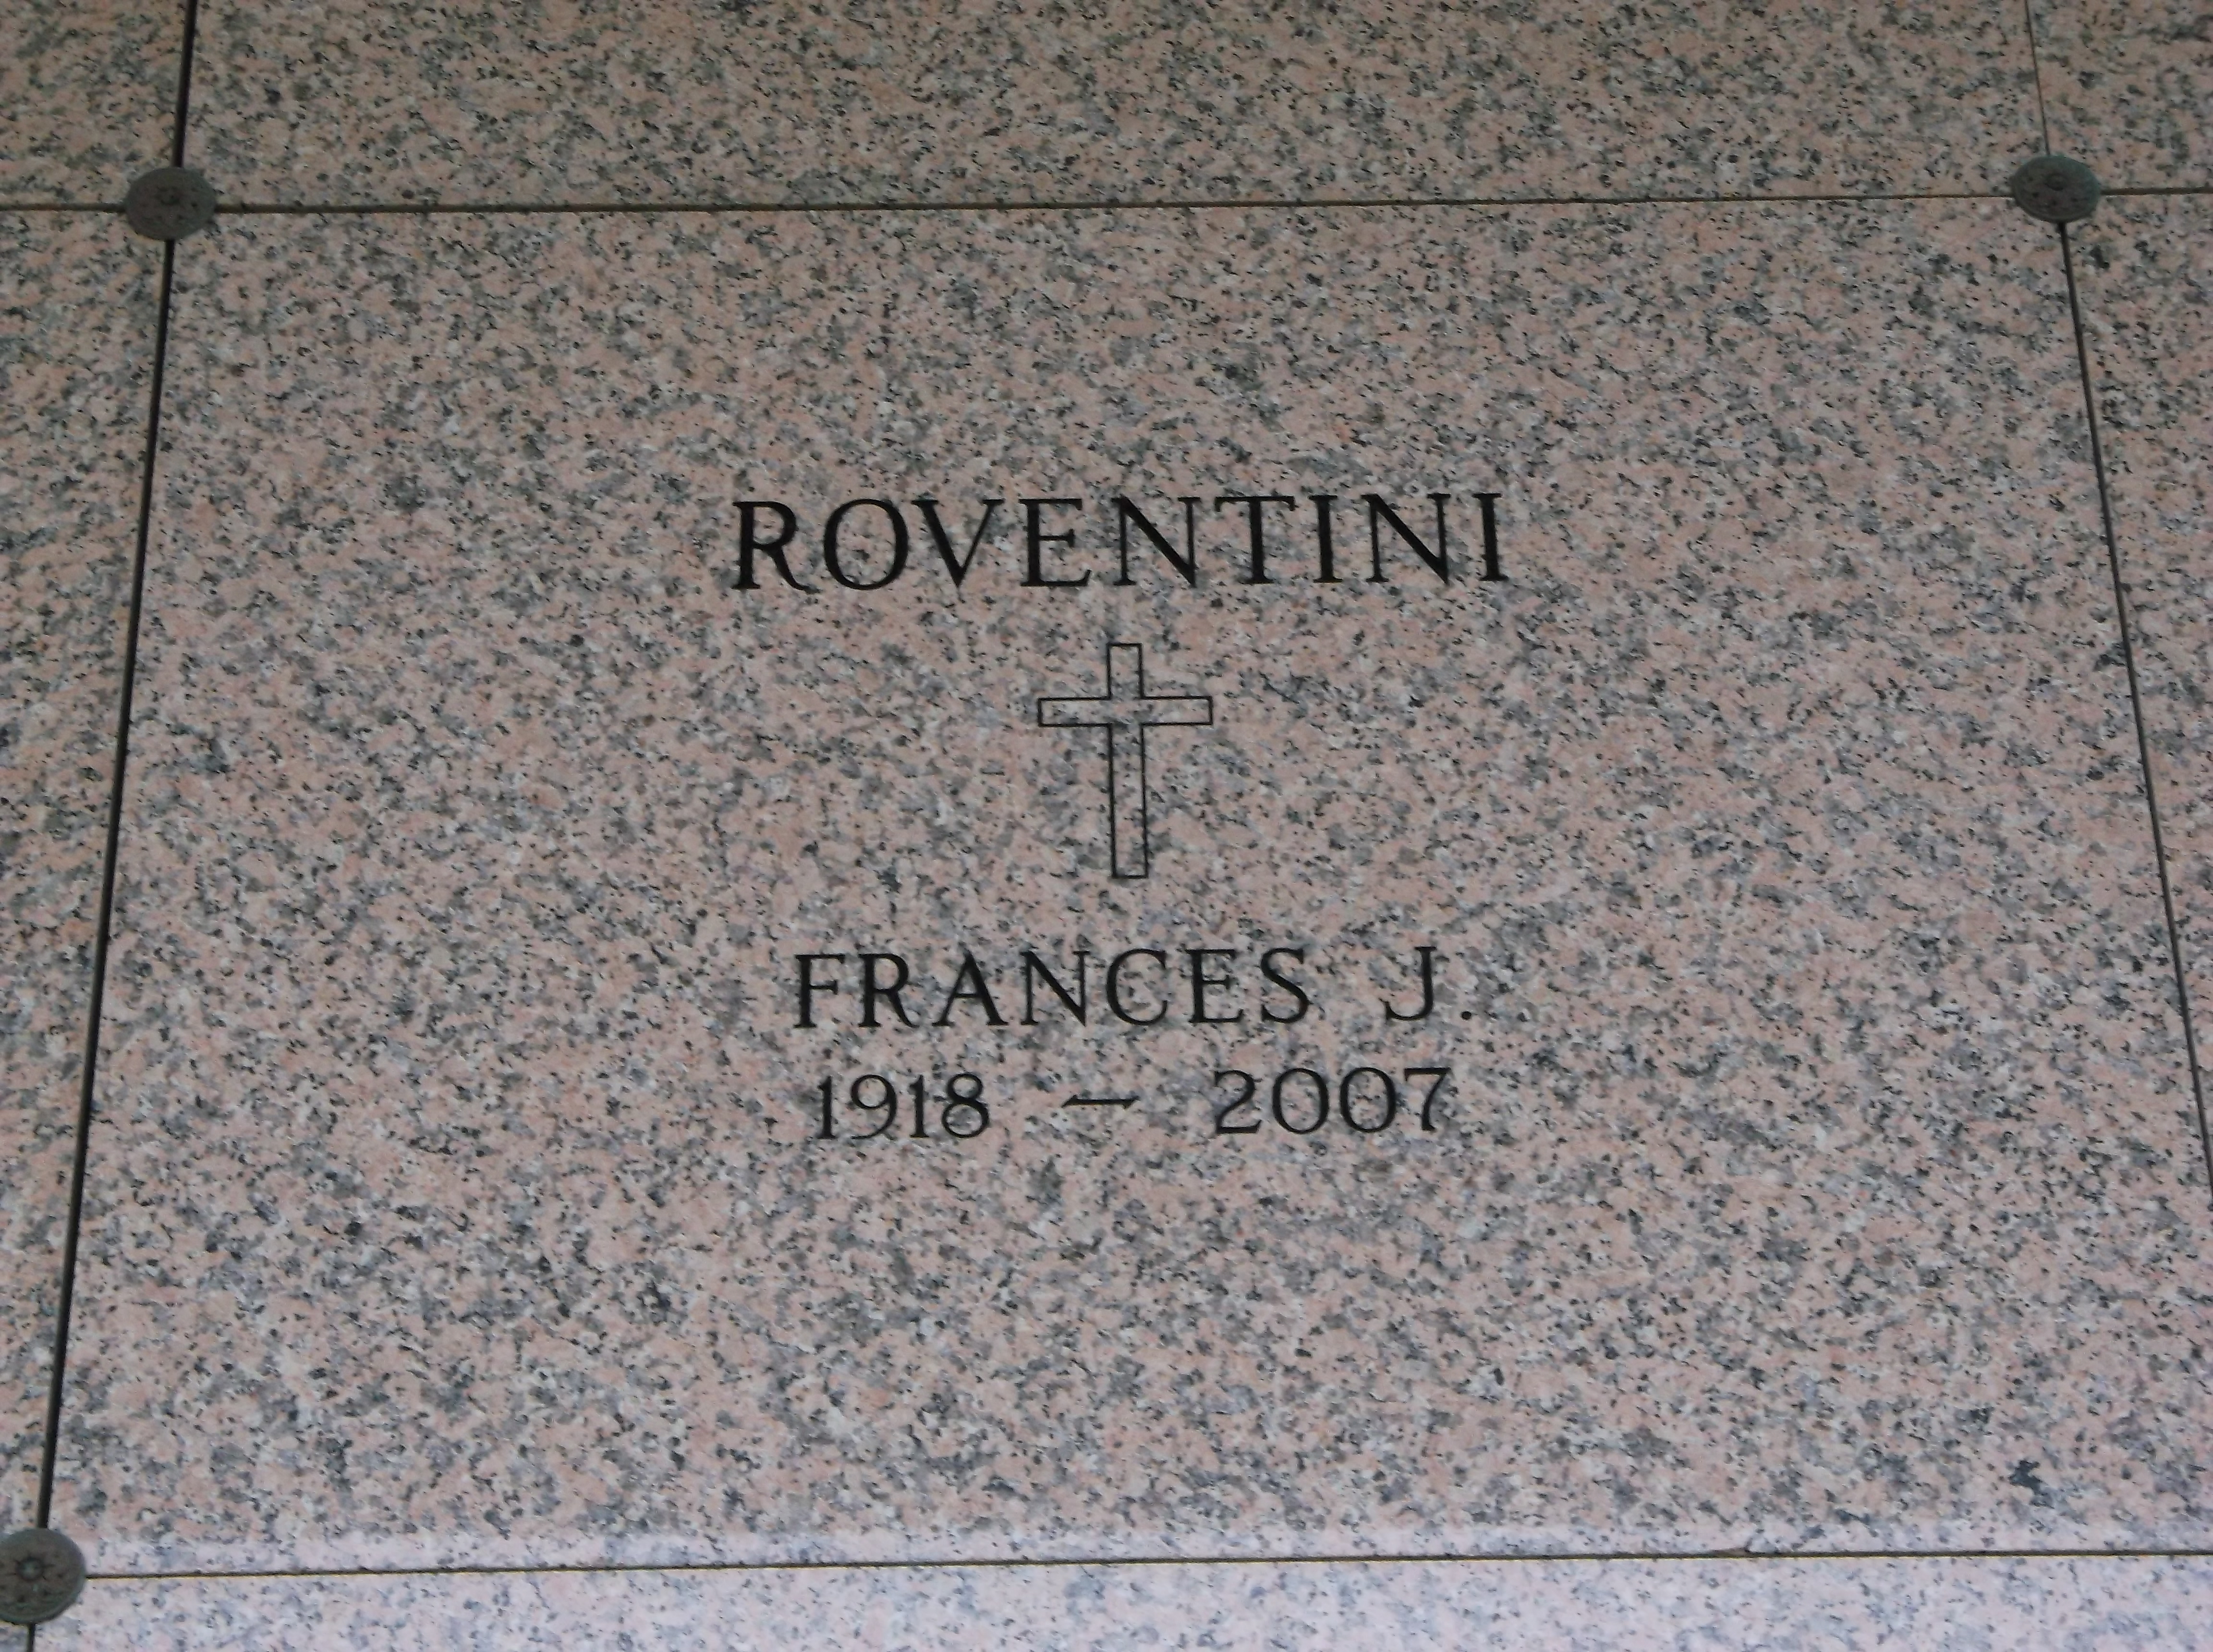 Frances J Roventini